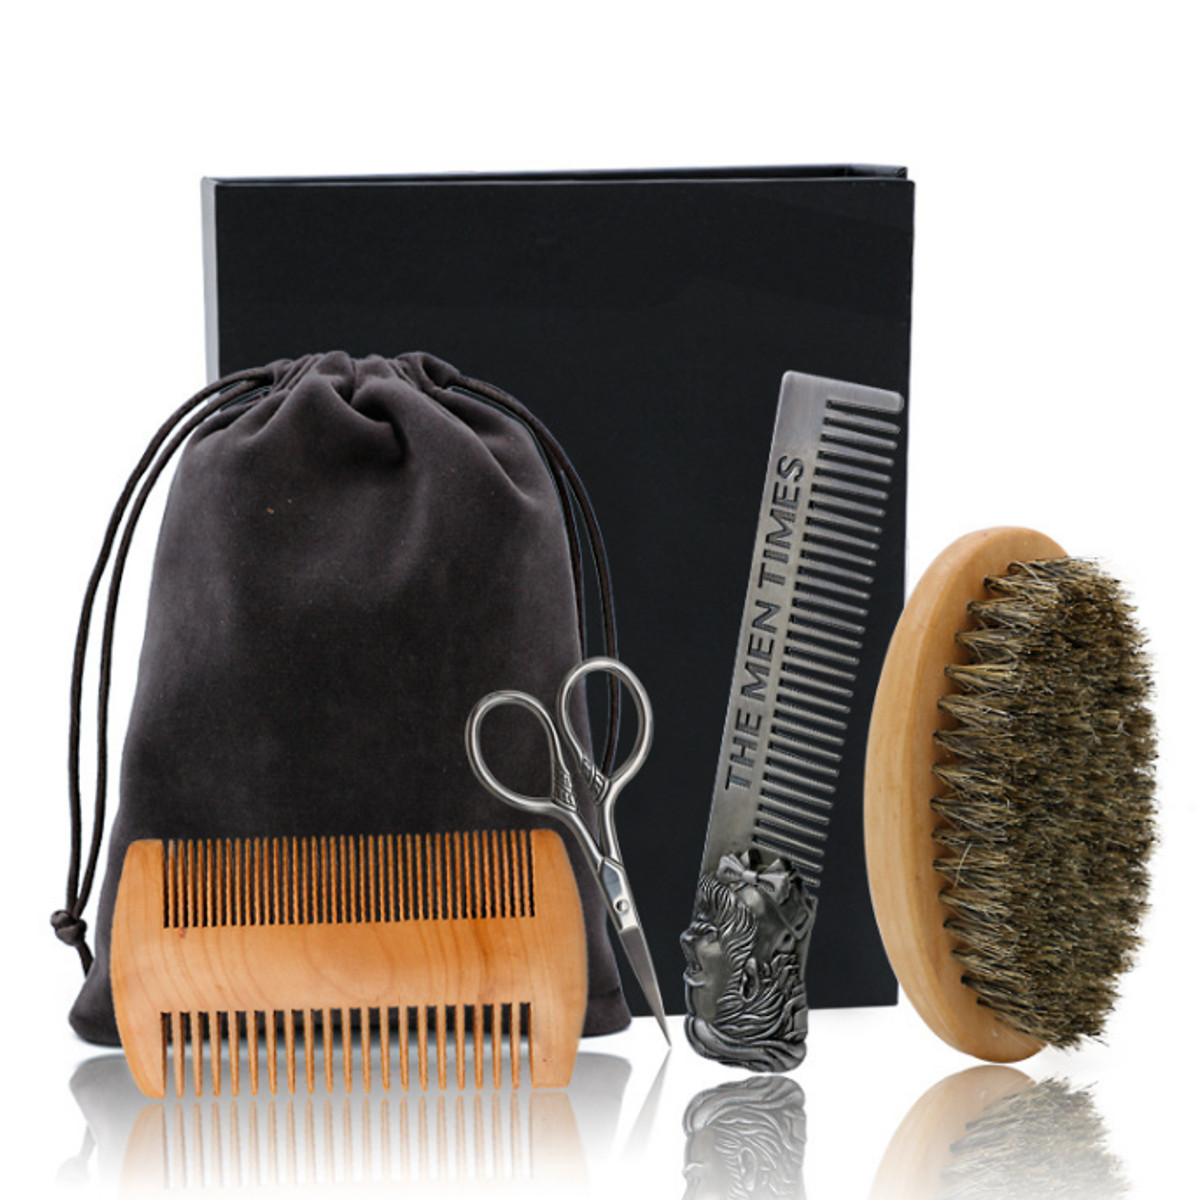 

6Pcs/Set Beard Grooming & Trimming Kit Brush Comb Scissors Styling Mustache Care